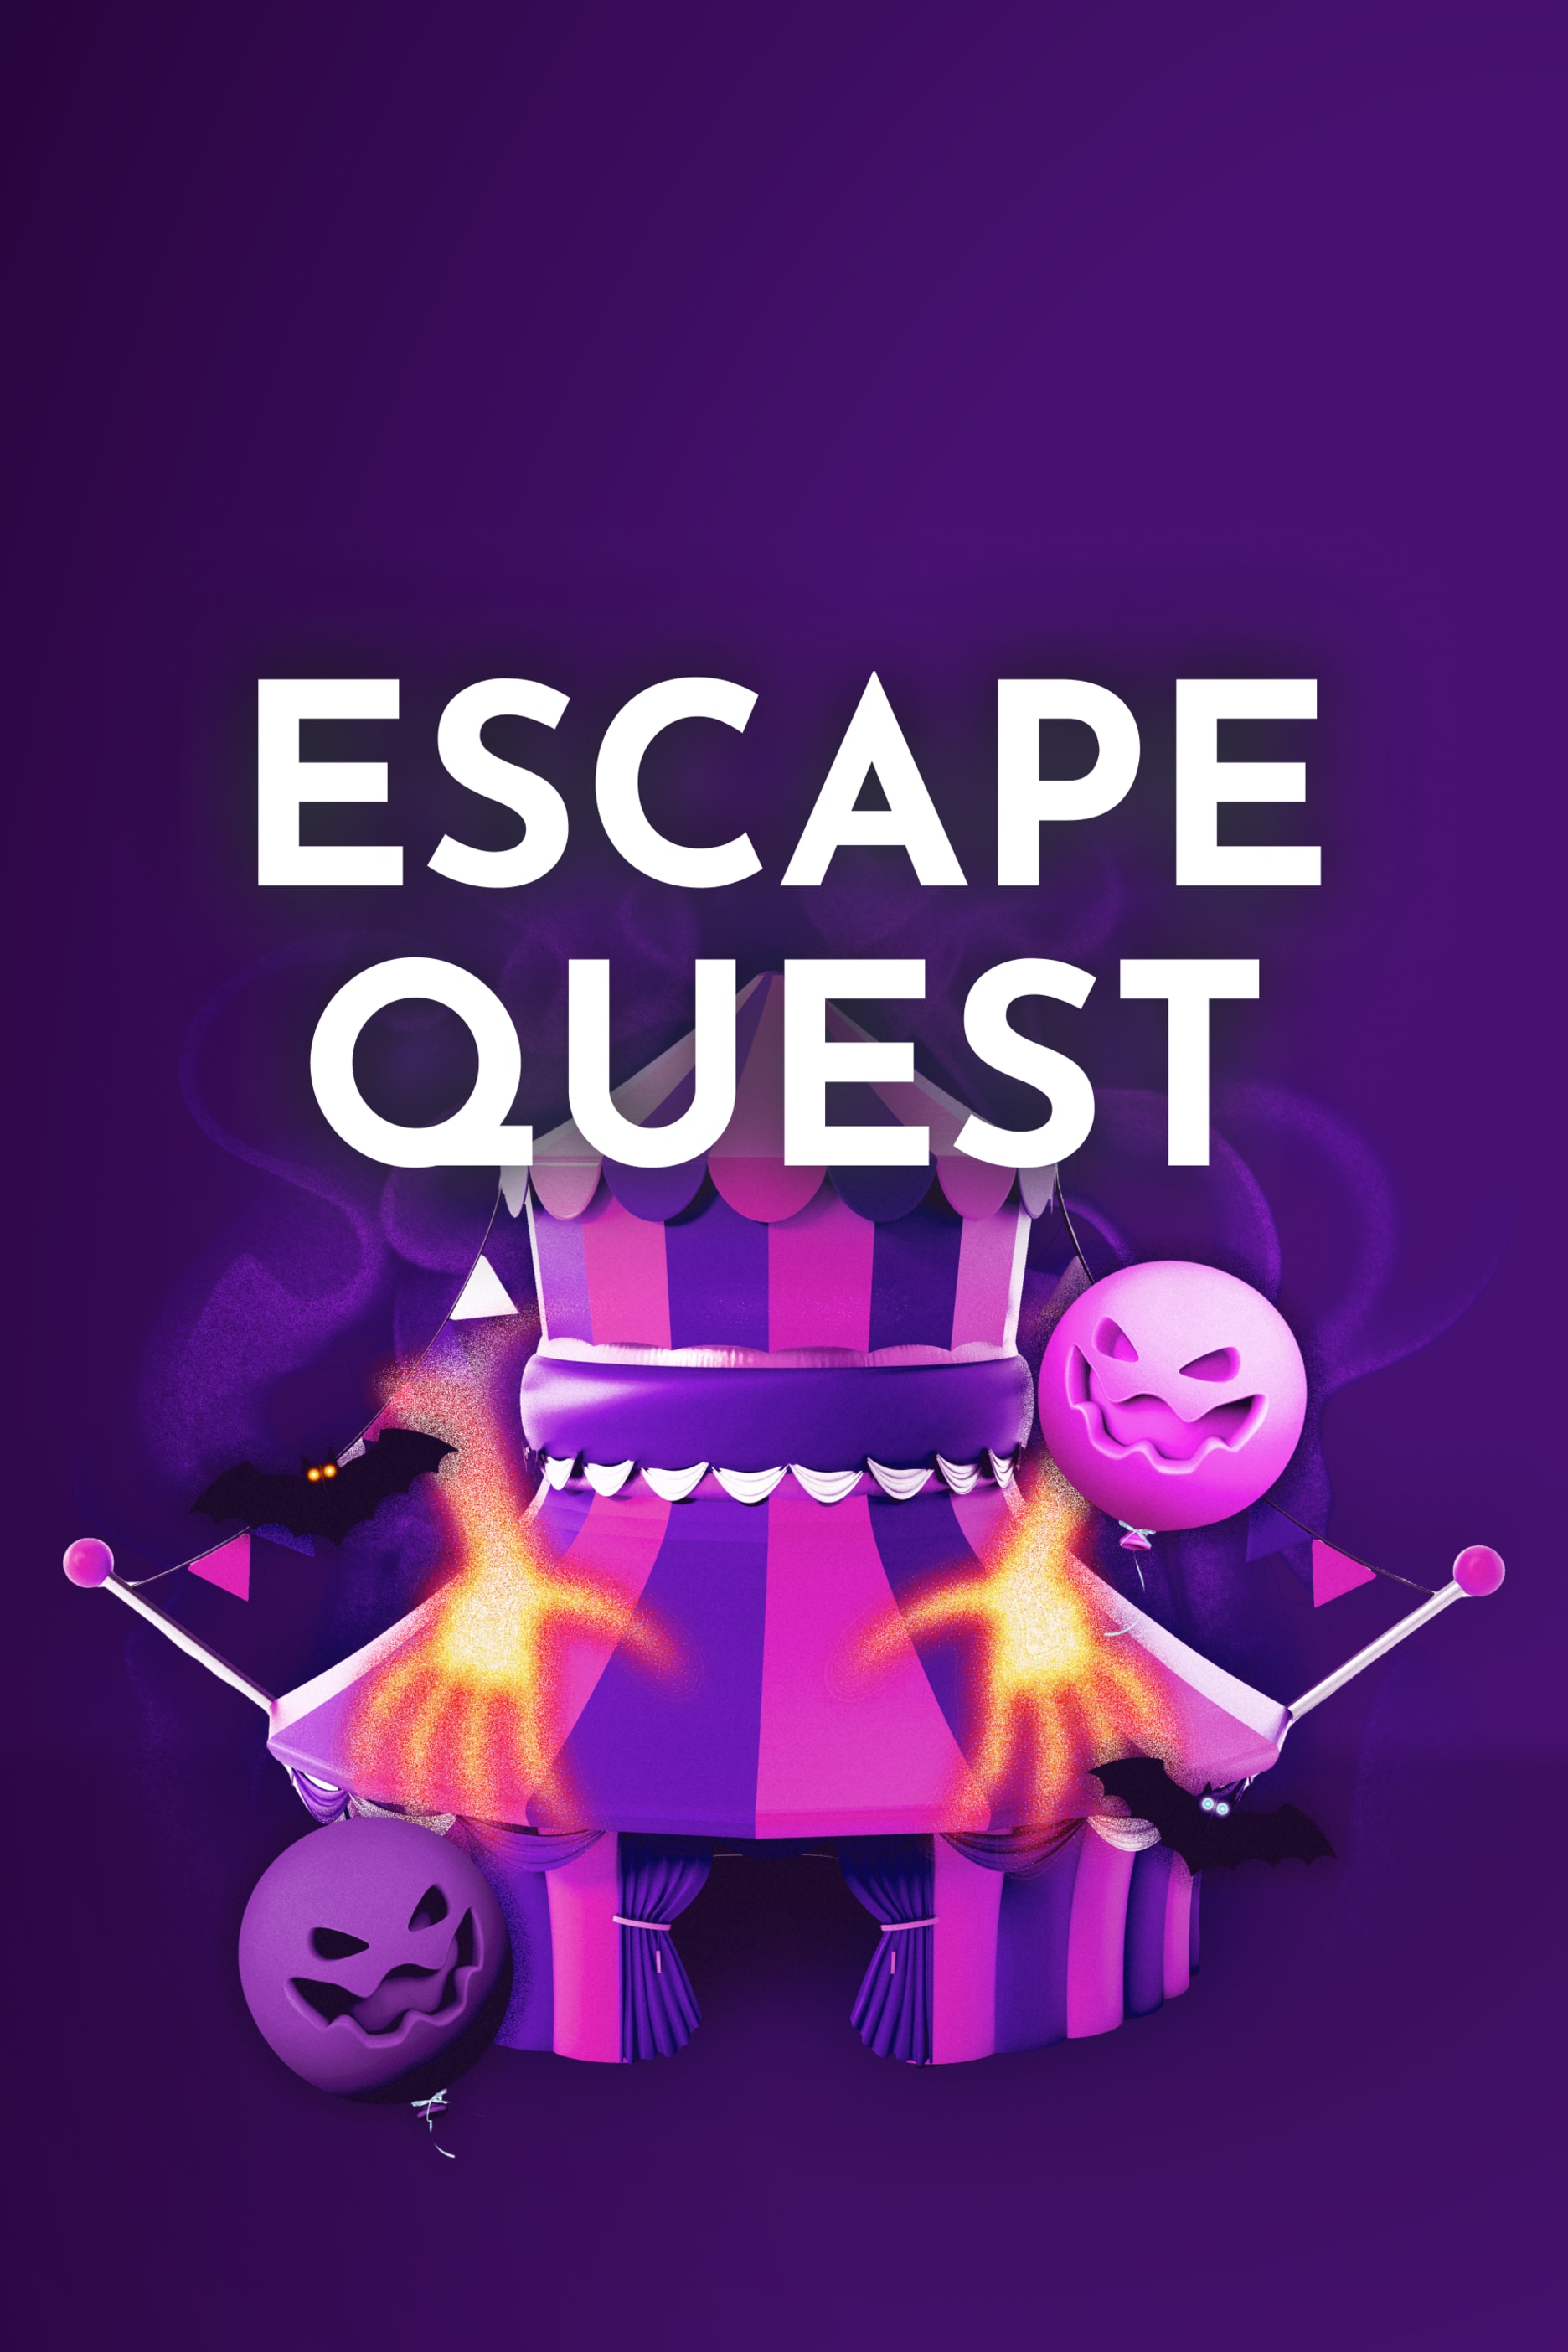 Ice Scream 2: Halloween Escape - Play Ice Scream 2: Halloween Escape Online  at